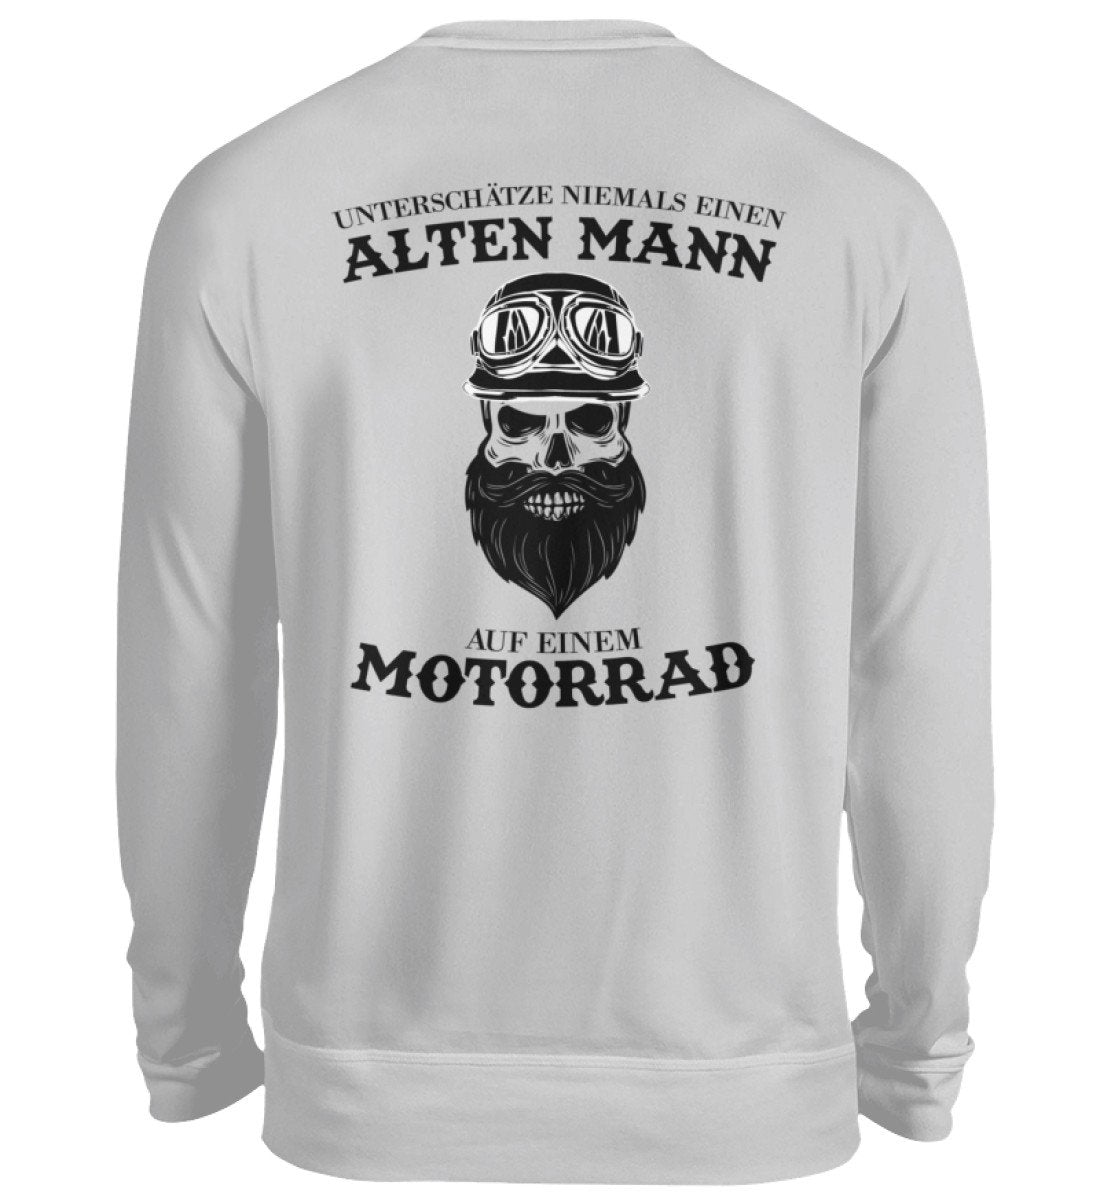 Alter Mann Motorrad - Herren Sweater